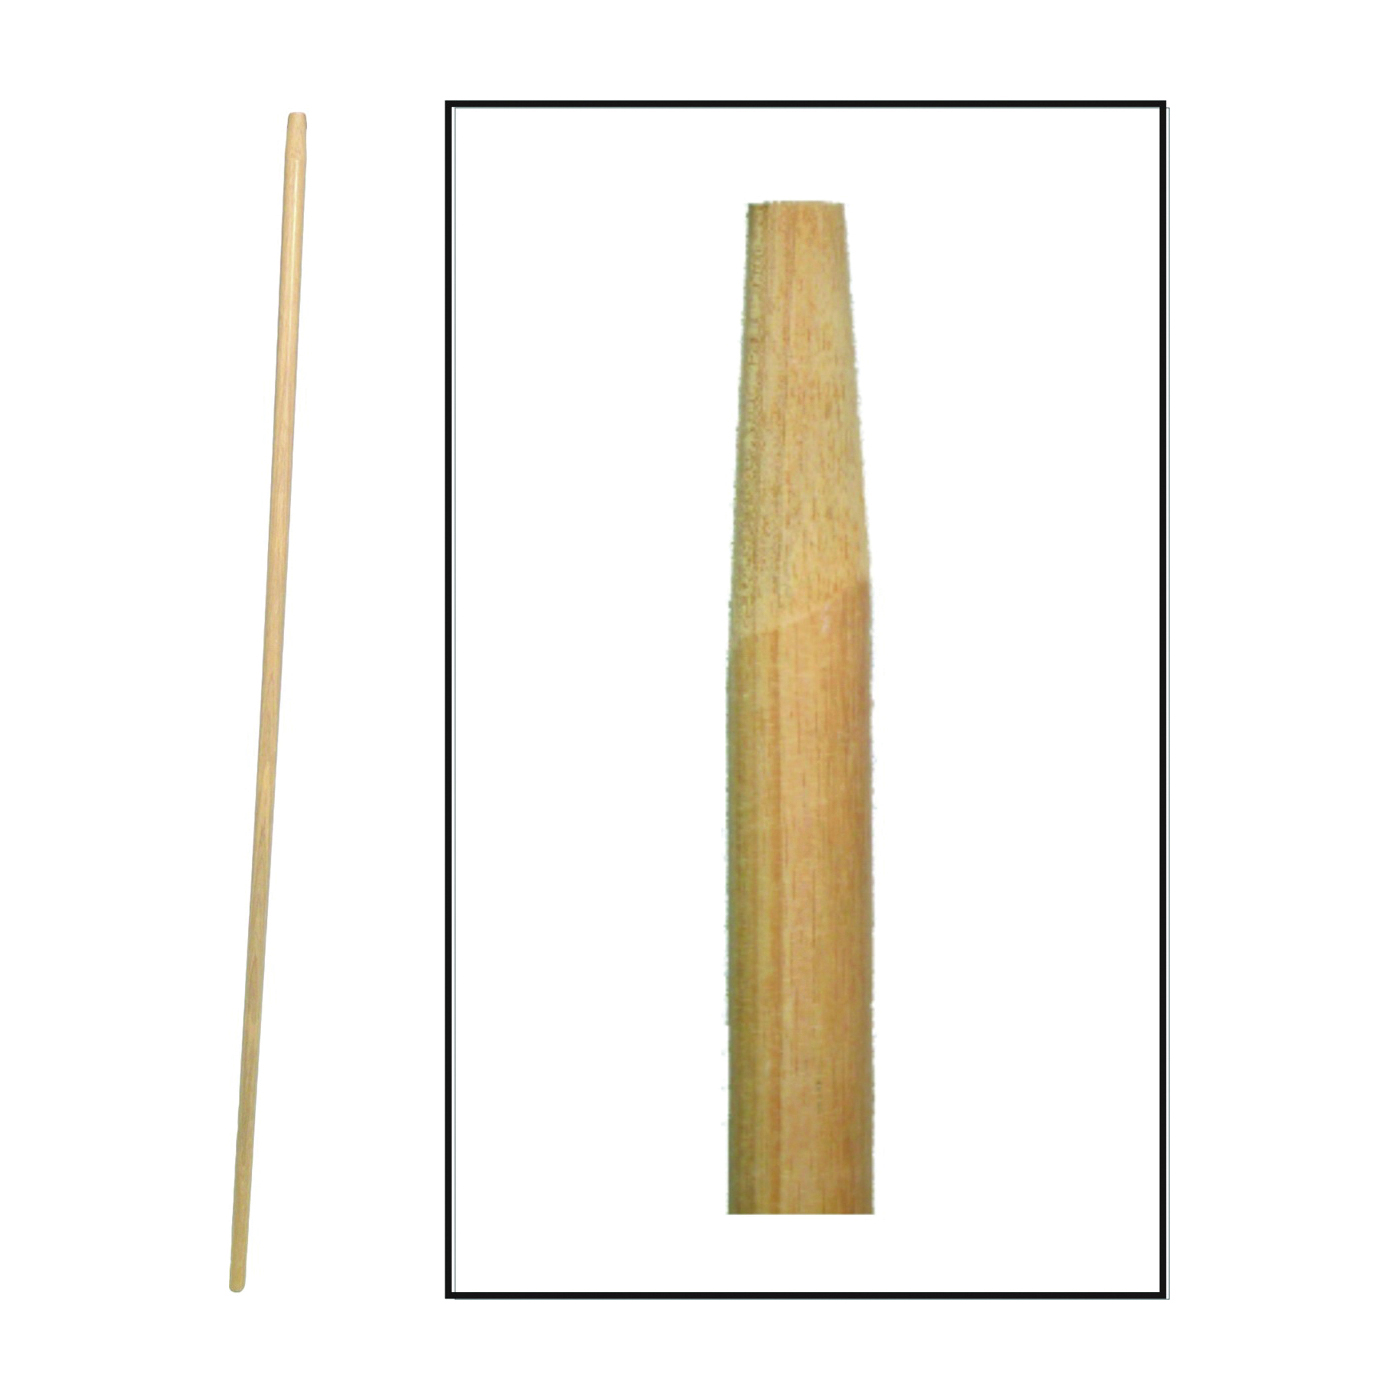 521-12 Broom Handle, 15/16 in Dia, 60 in L, Hardwood